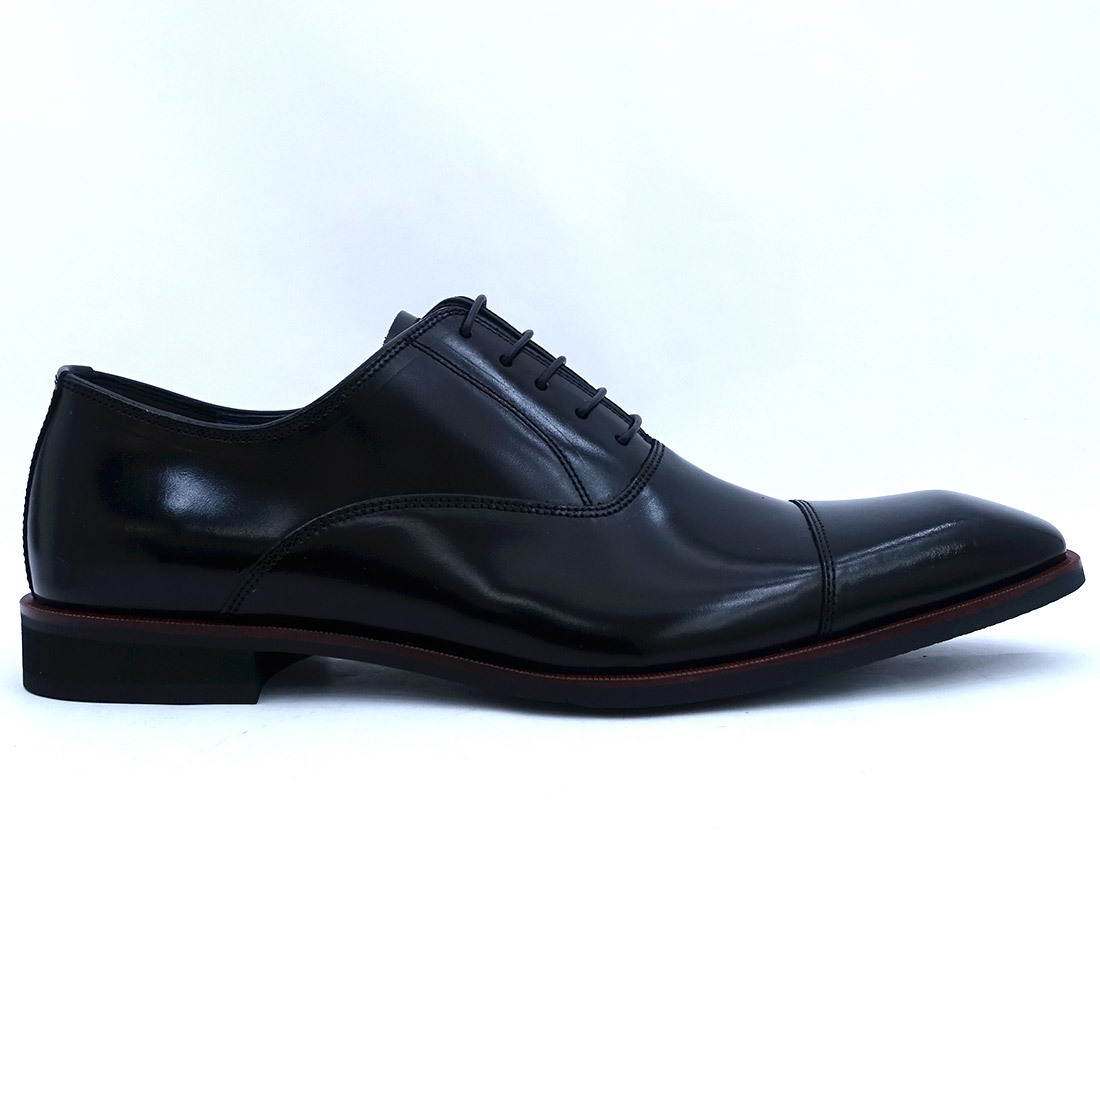 ▲Yumi Sienne ユミジェンヌ YS8035 ビジネスシューズ ストレートチップ 本革 メンズ 革靴 ブラック Black 黒 24.5cm (0910010661-bk-s245)_画像2